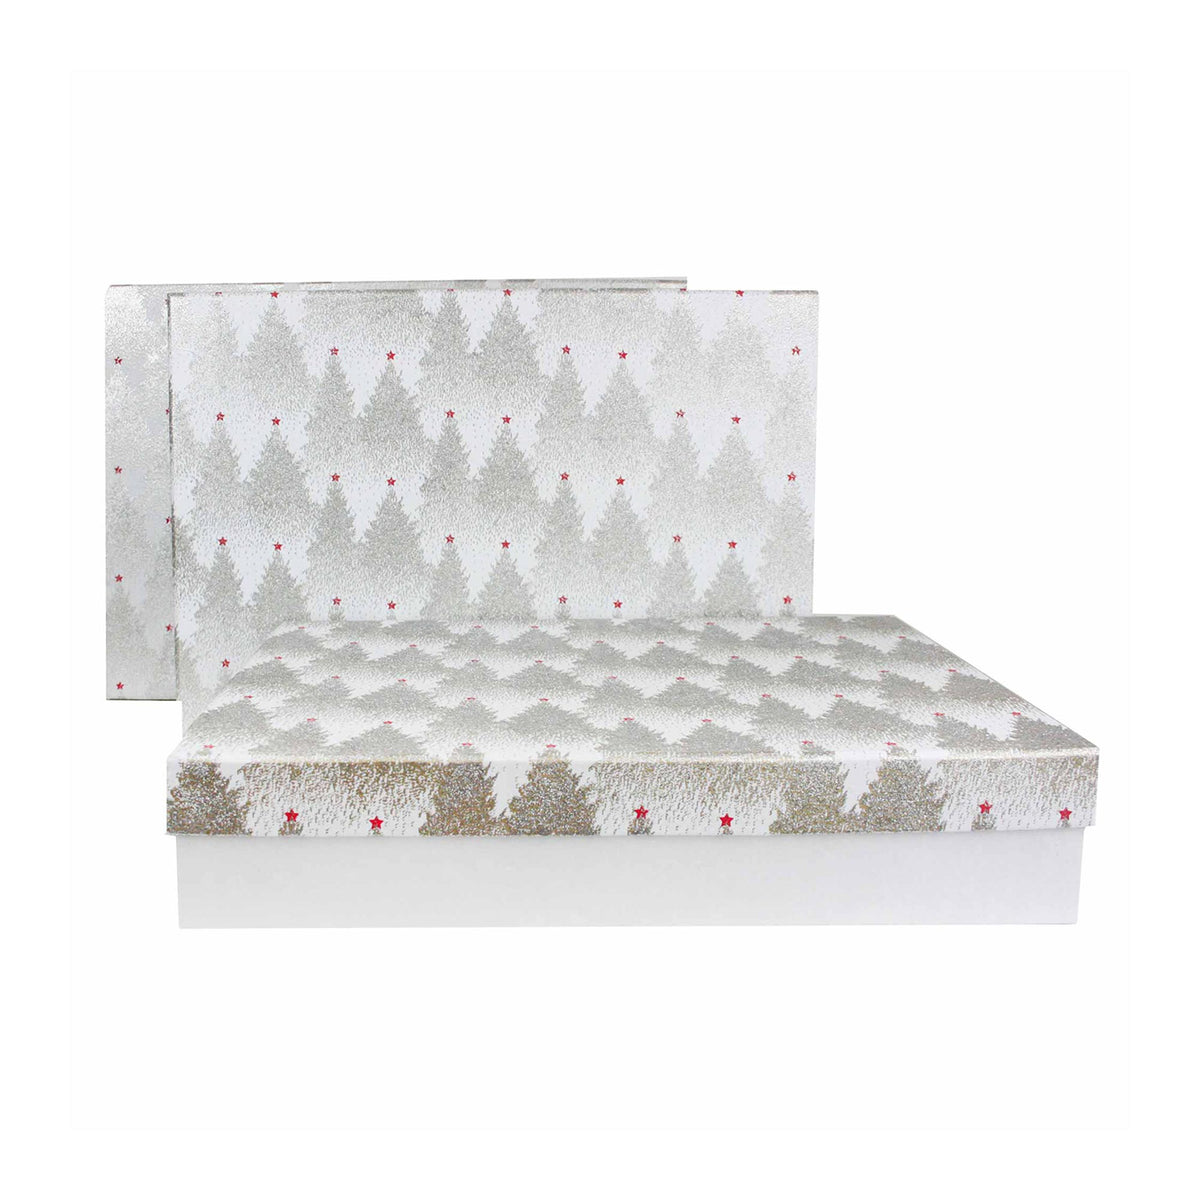 Set of 3 Handmade Glitter White Gift Boxes (Sizes Available)